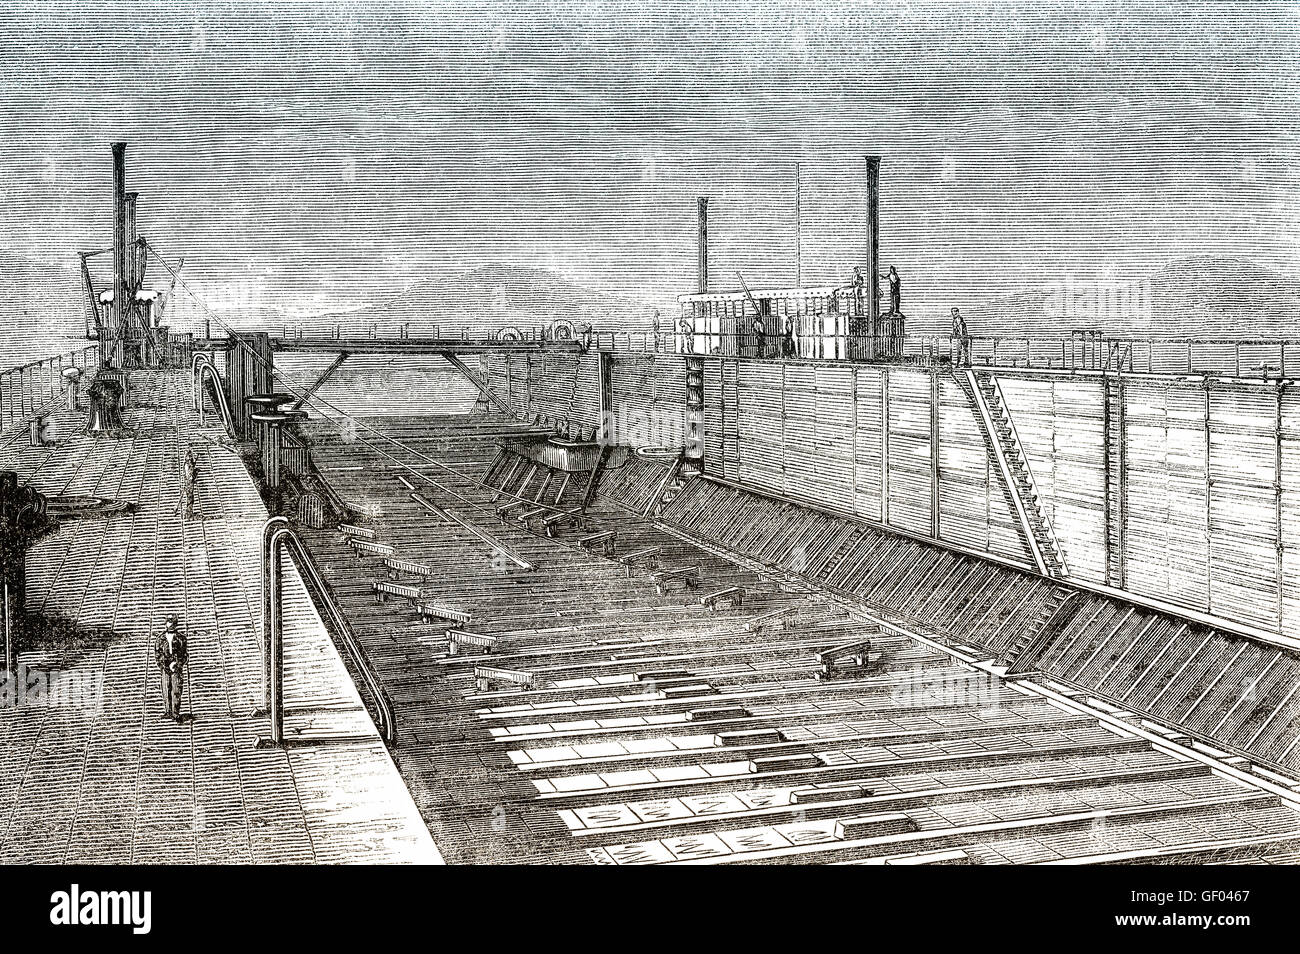 A dry dock ship repair facility, Suez, Egypt, 19th century Stock Photo